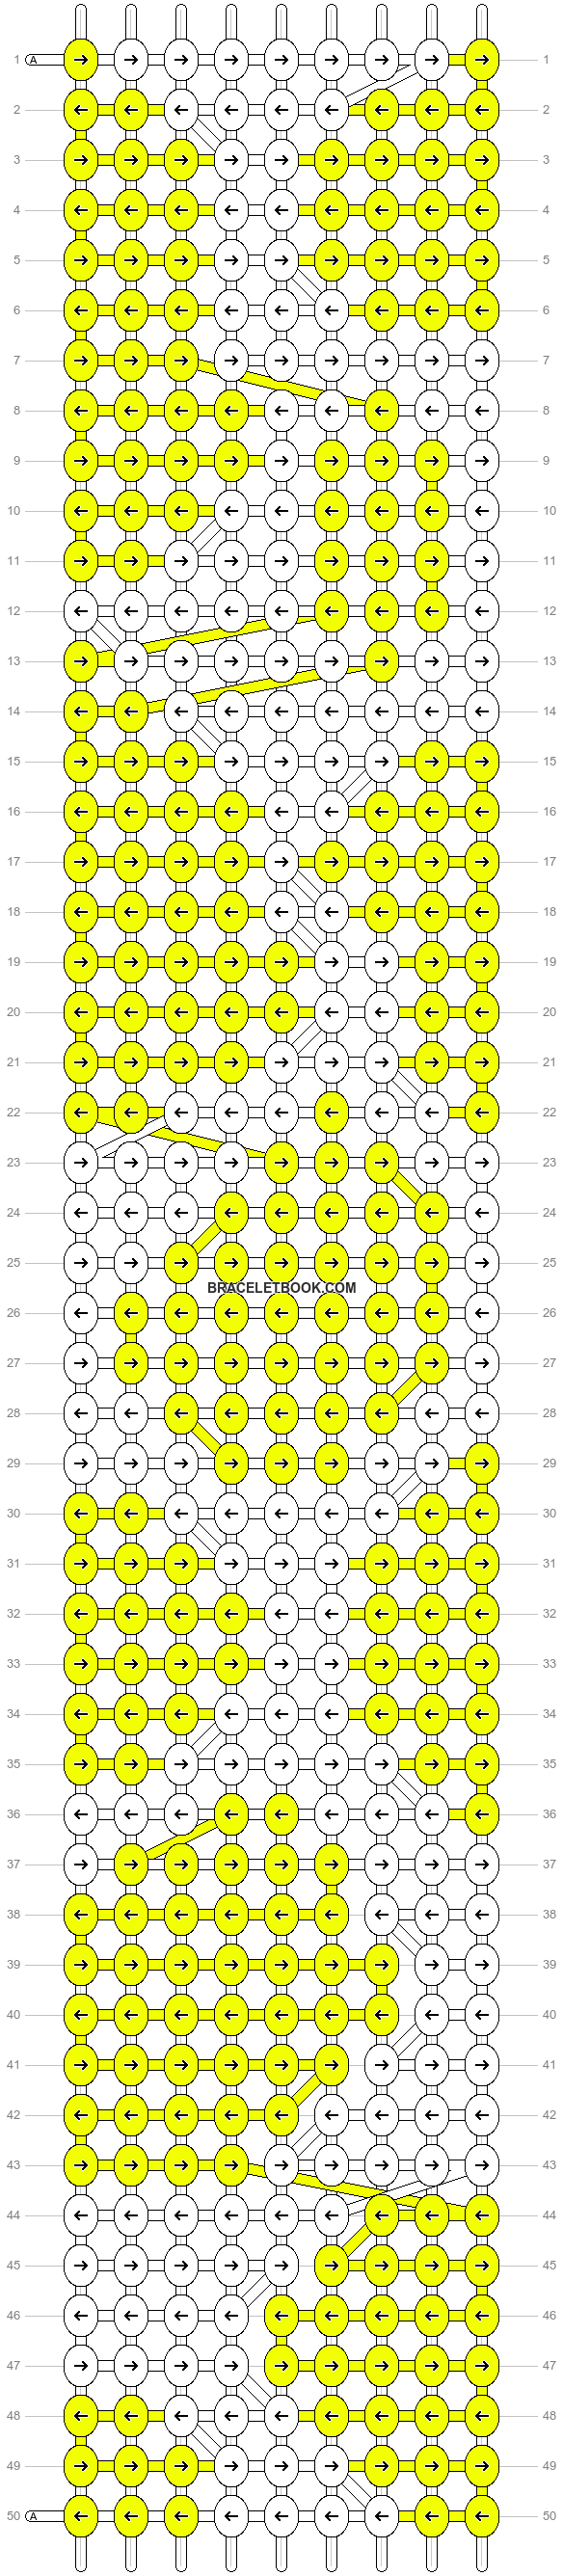 Alpha pattern #51266 variation #83867 pattern